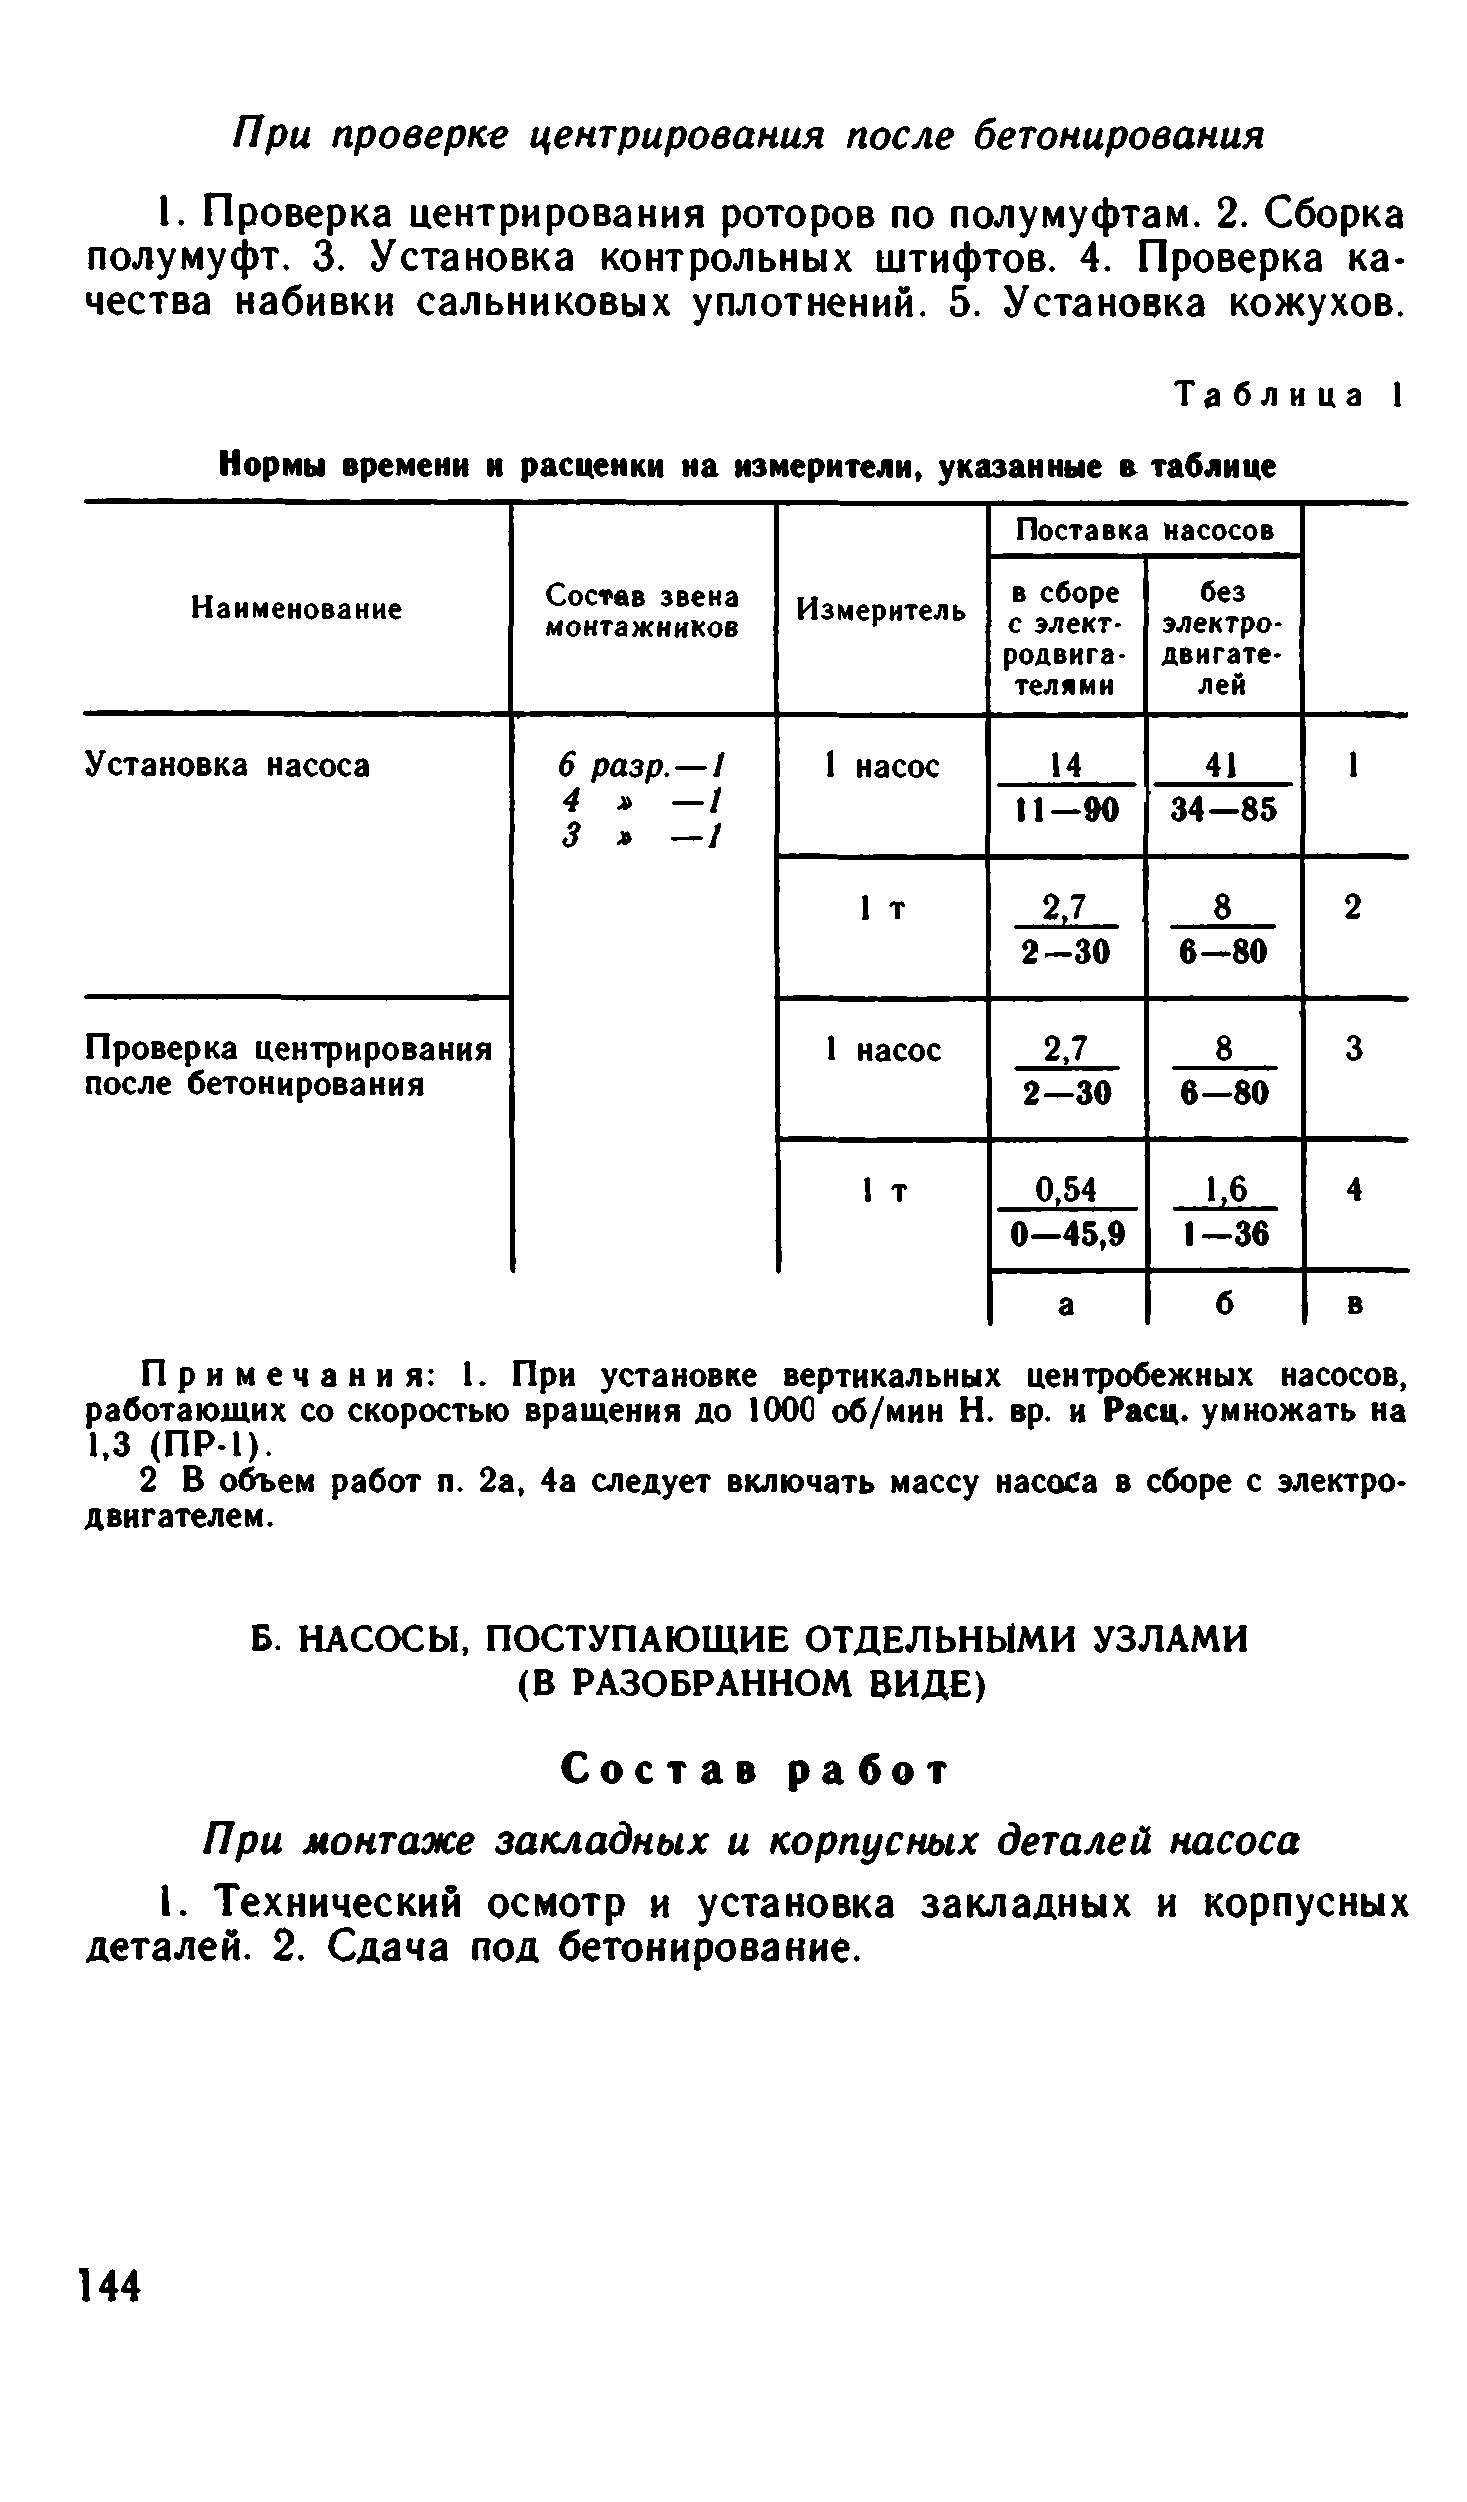 ВНиР В17-2